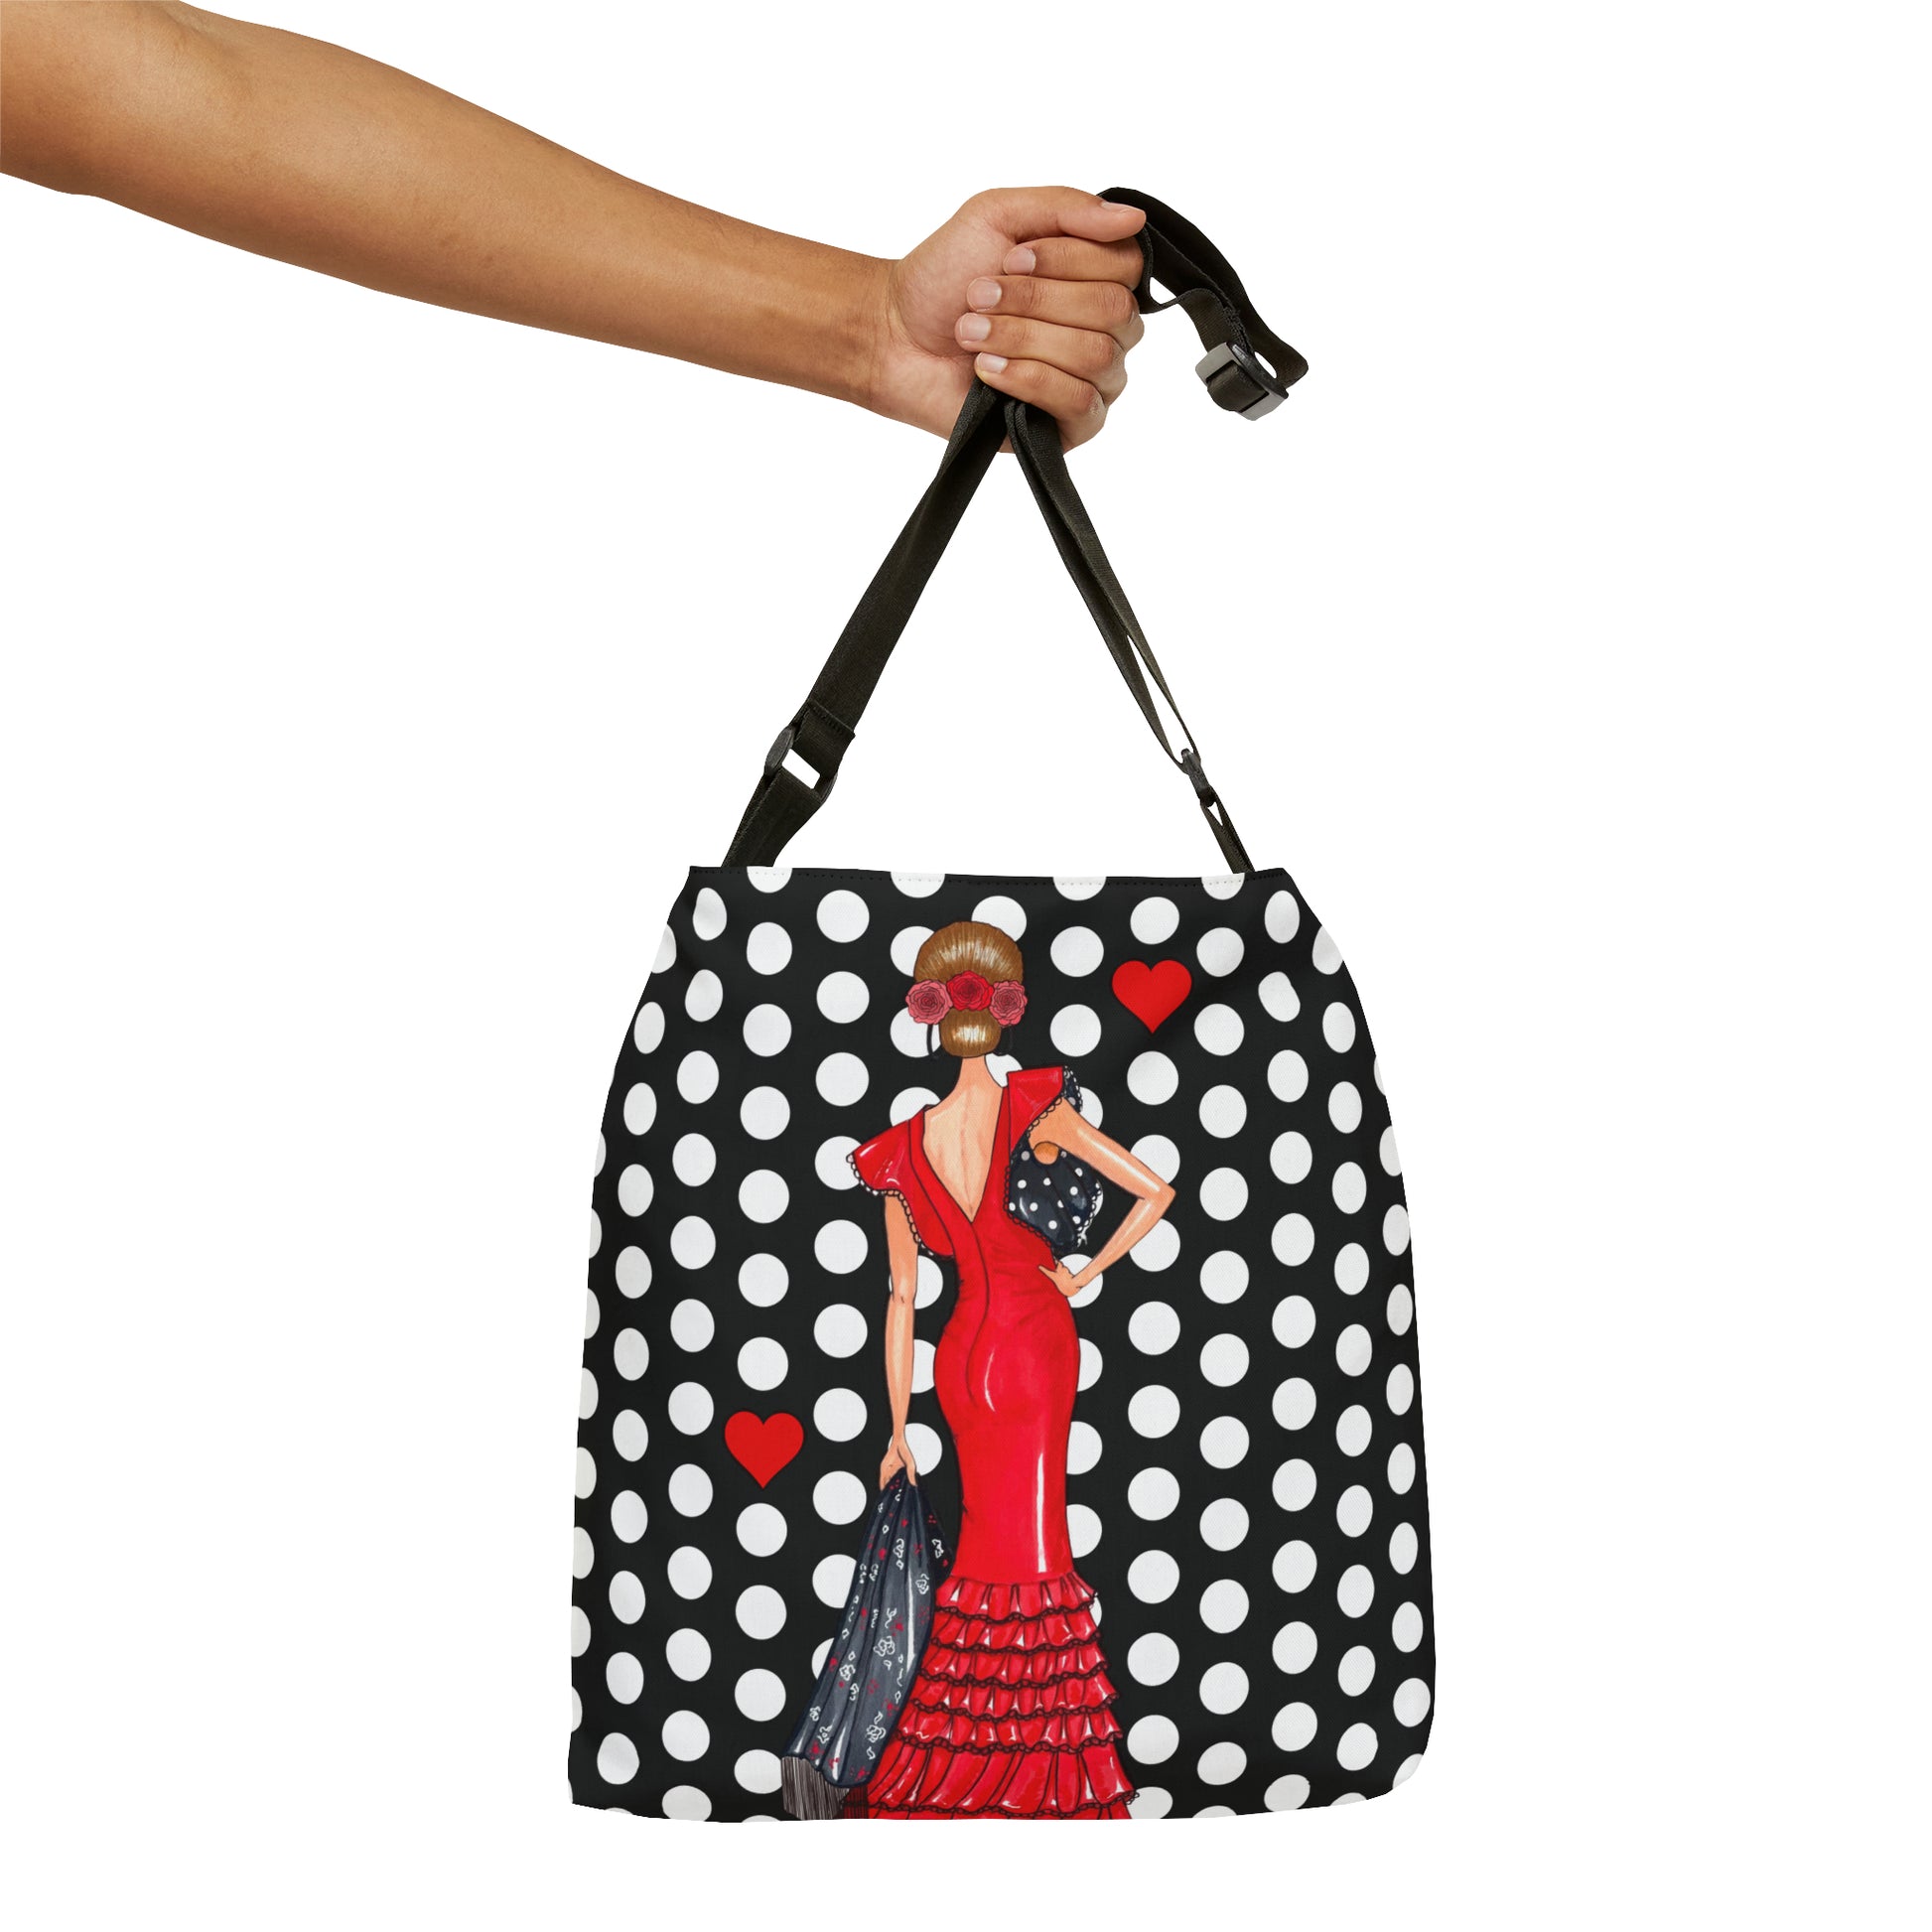 a hand holding a black and white polka dot purse